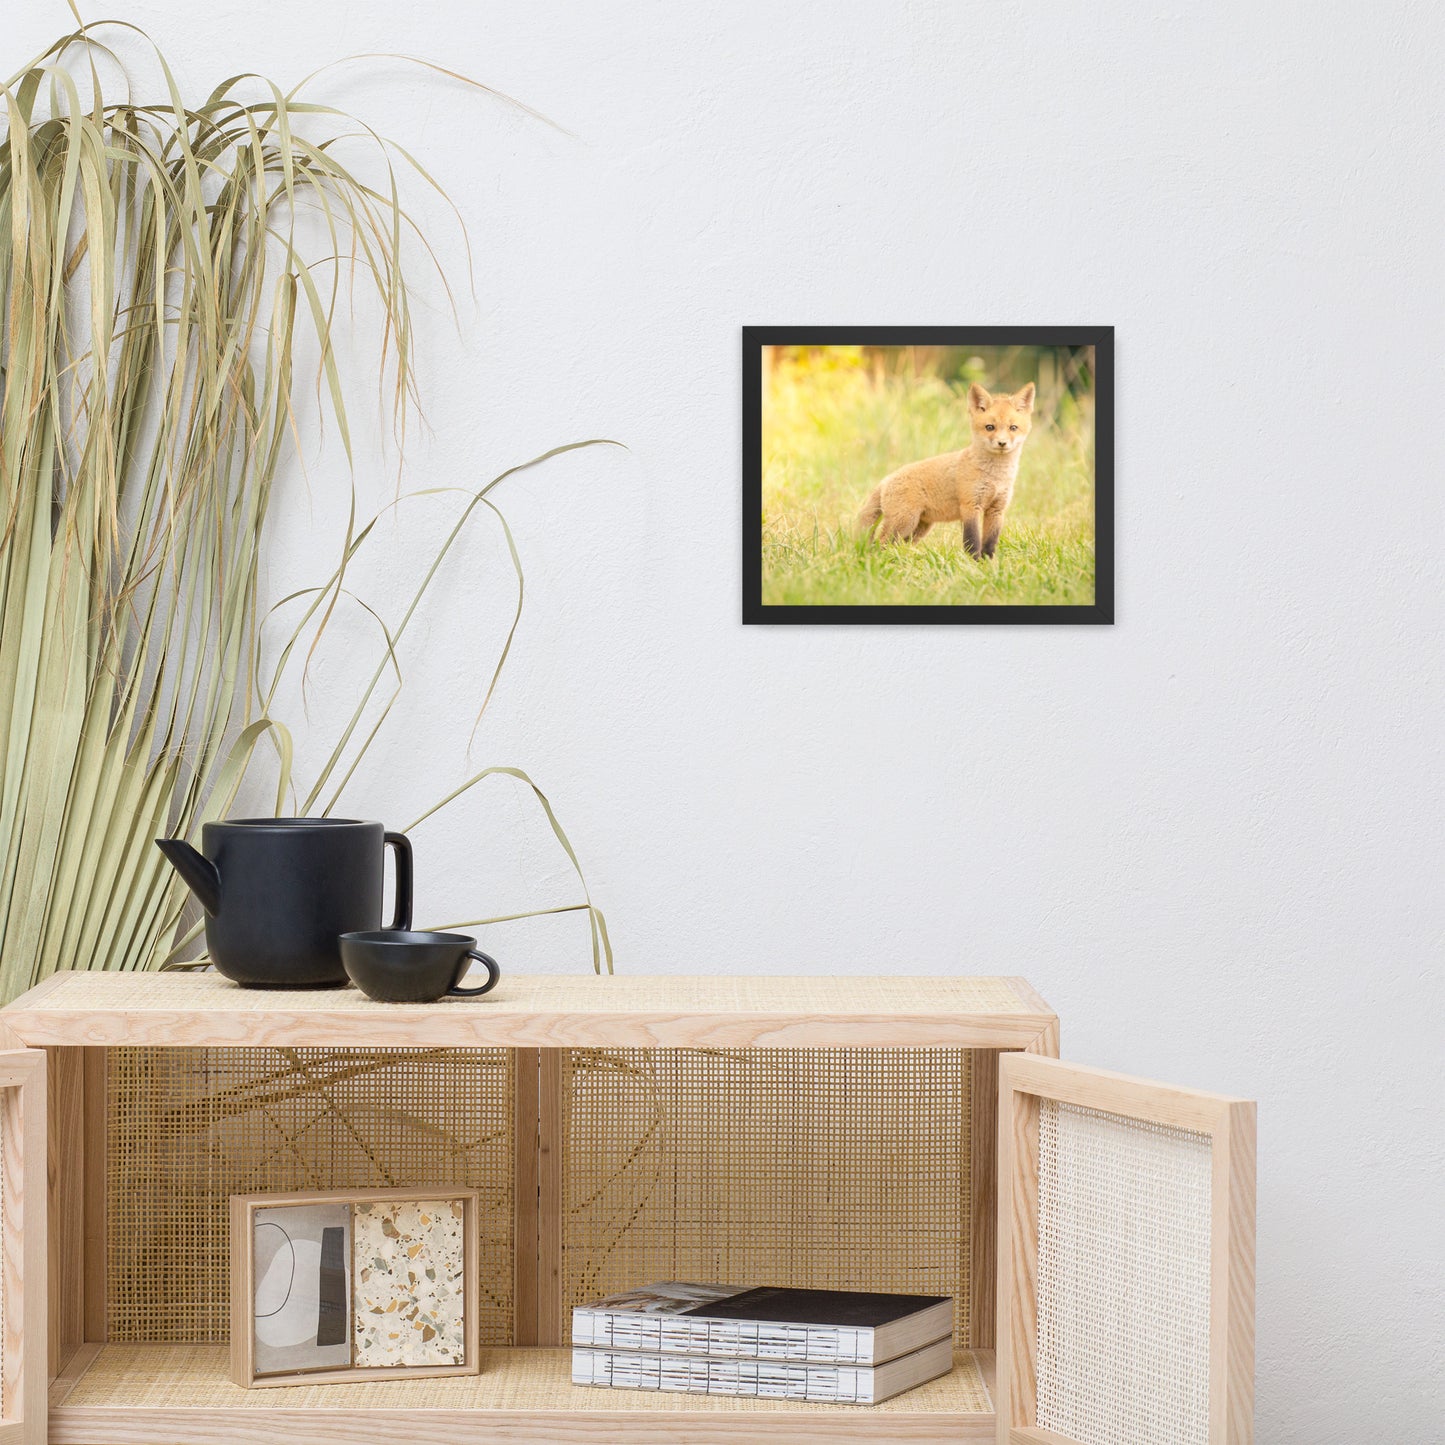 Framed Childrens Wall Art: Baby Red Fox in the Sun - Animal / Wildlife / Nature Artwork - Wall Decor - Framed Wall Art Print